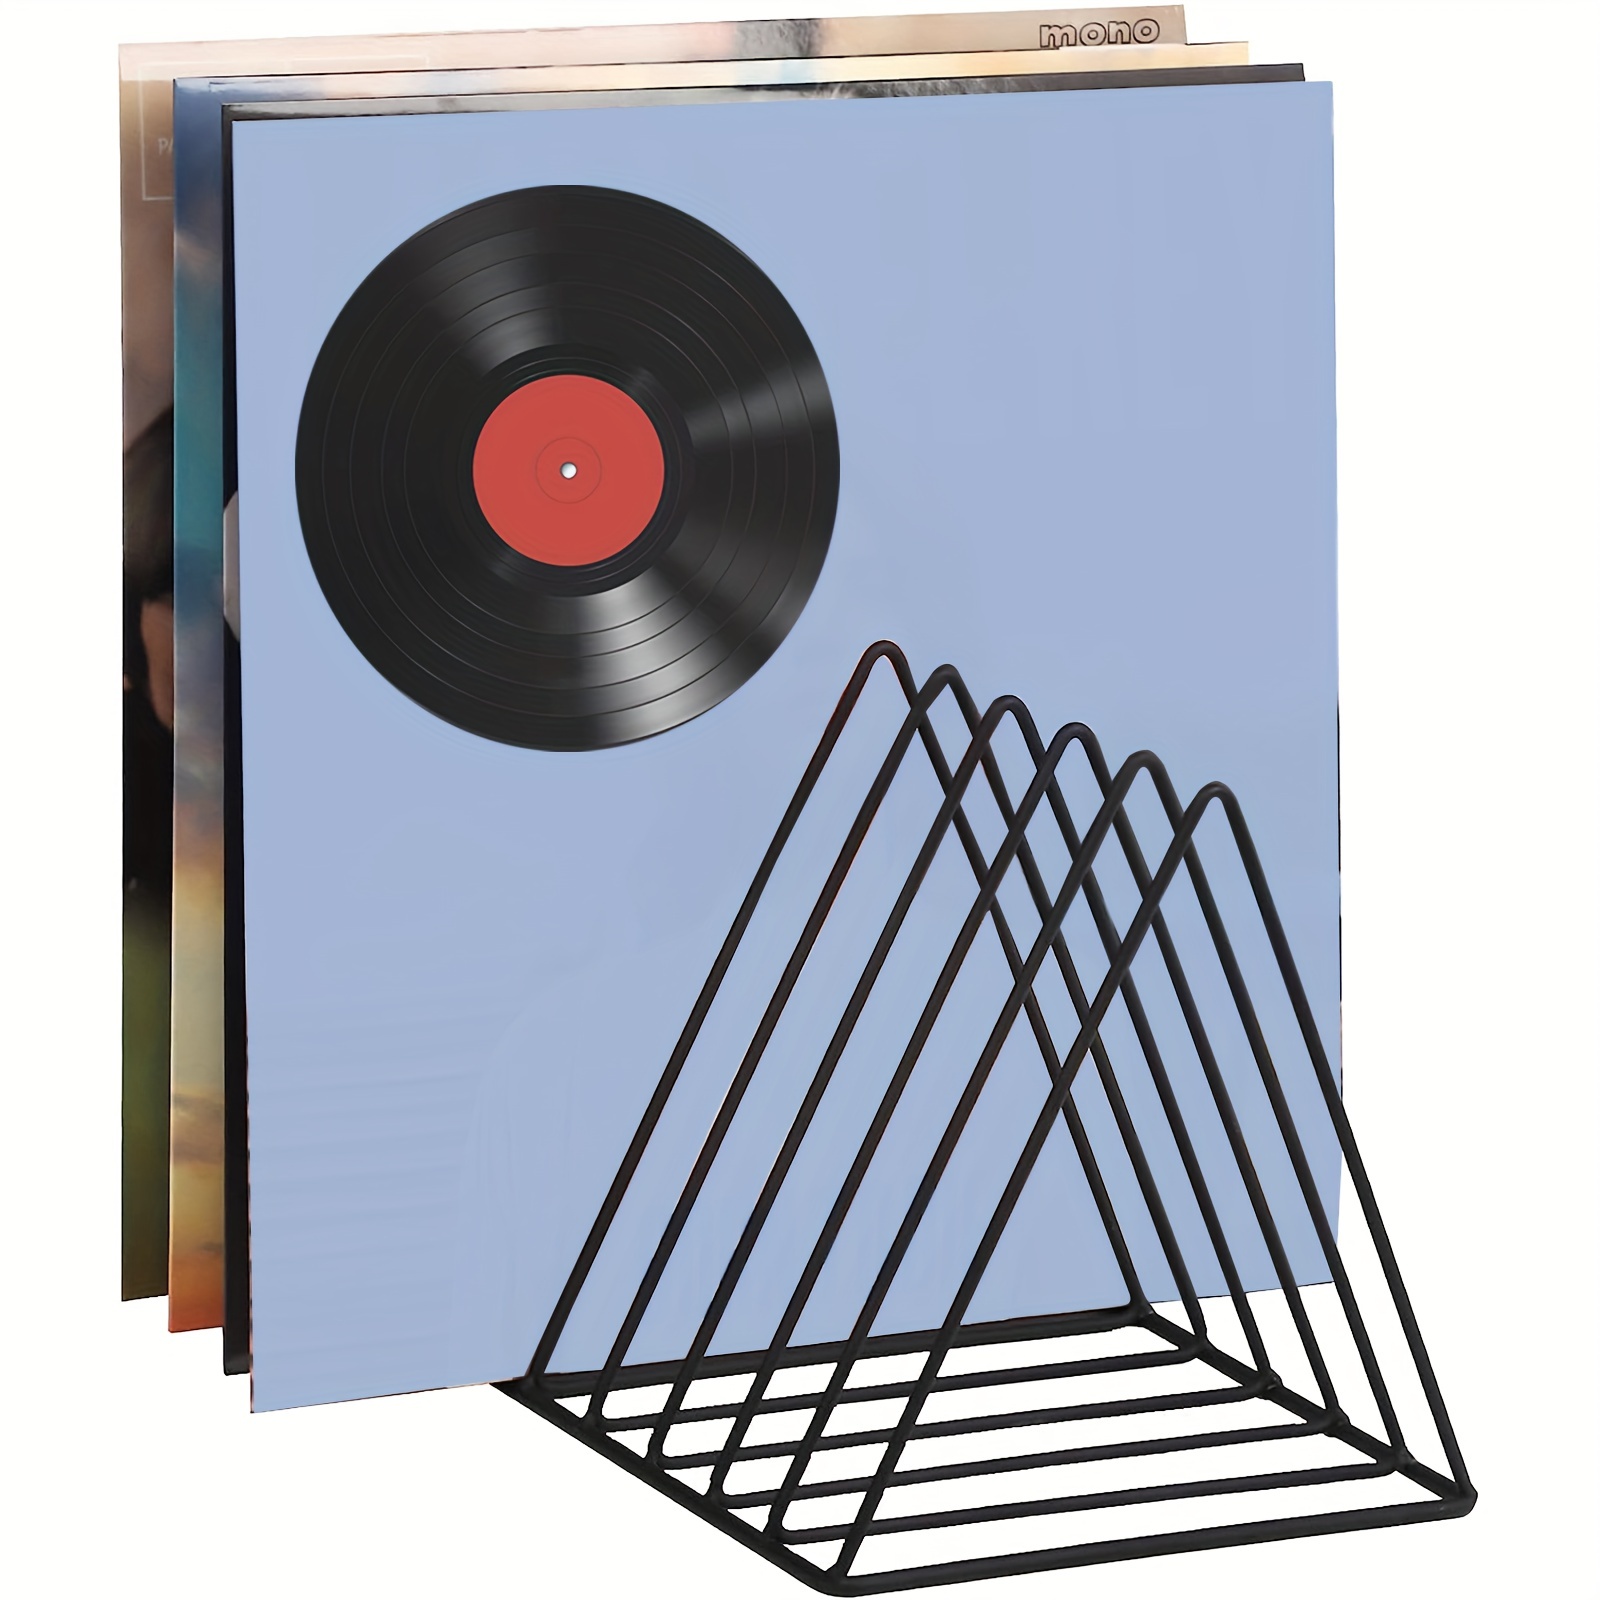 

1pc Metal Triangular Storage Rack, Vinyl Record Storage Holder, 5 Slot Magazine Book Album Display Rack, Simple Desktop File Sorter Organizer, For Home Office Dorm (black/white)